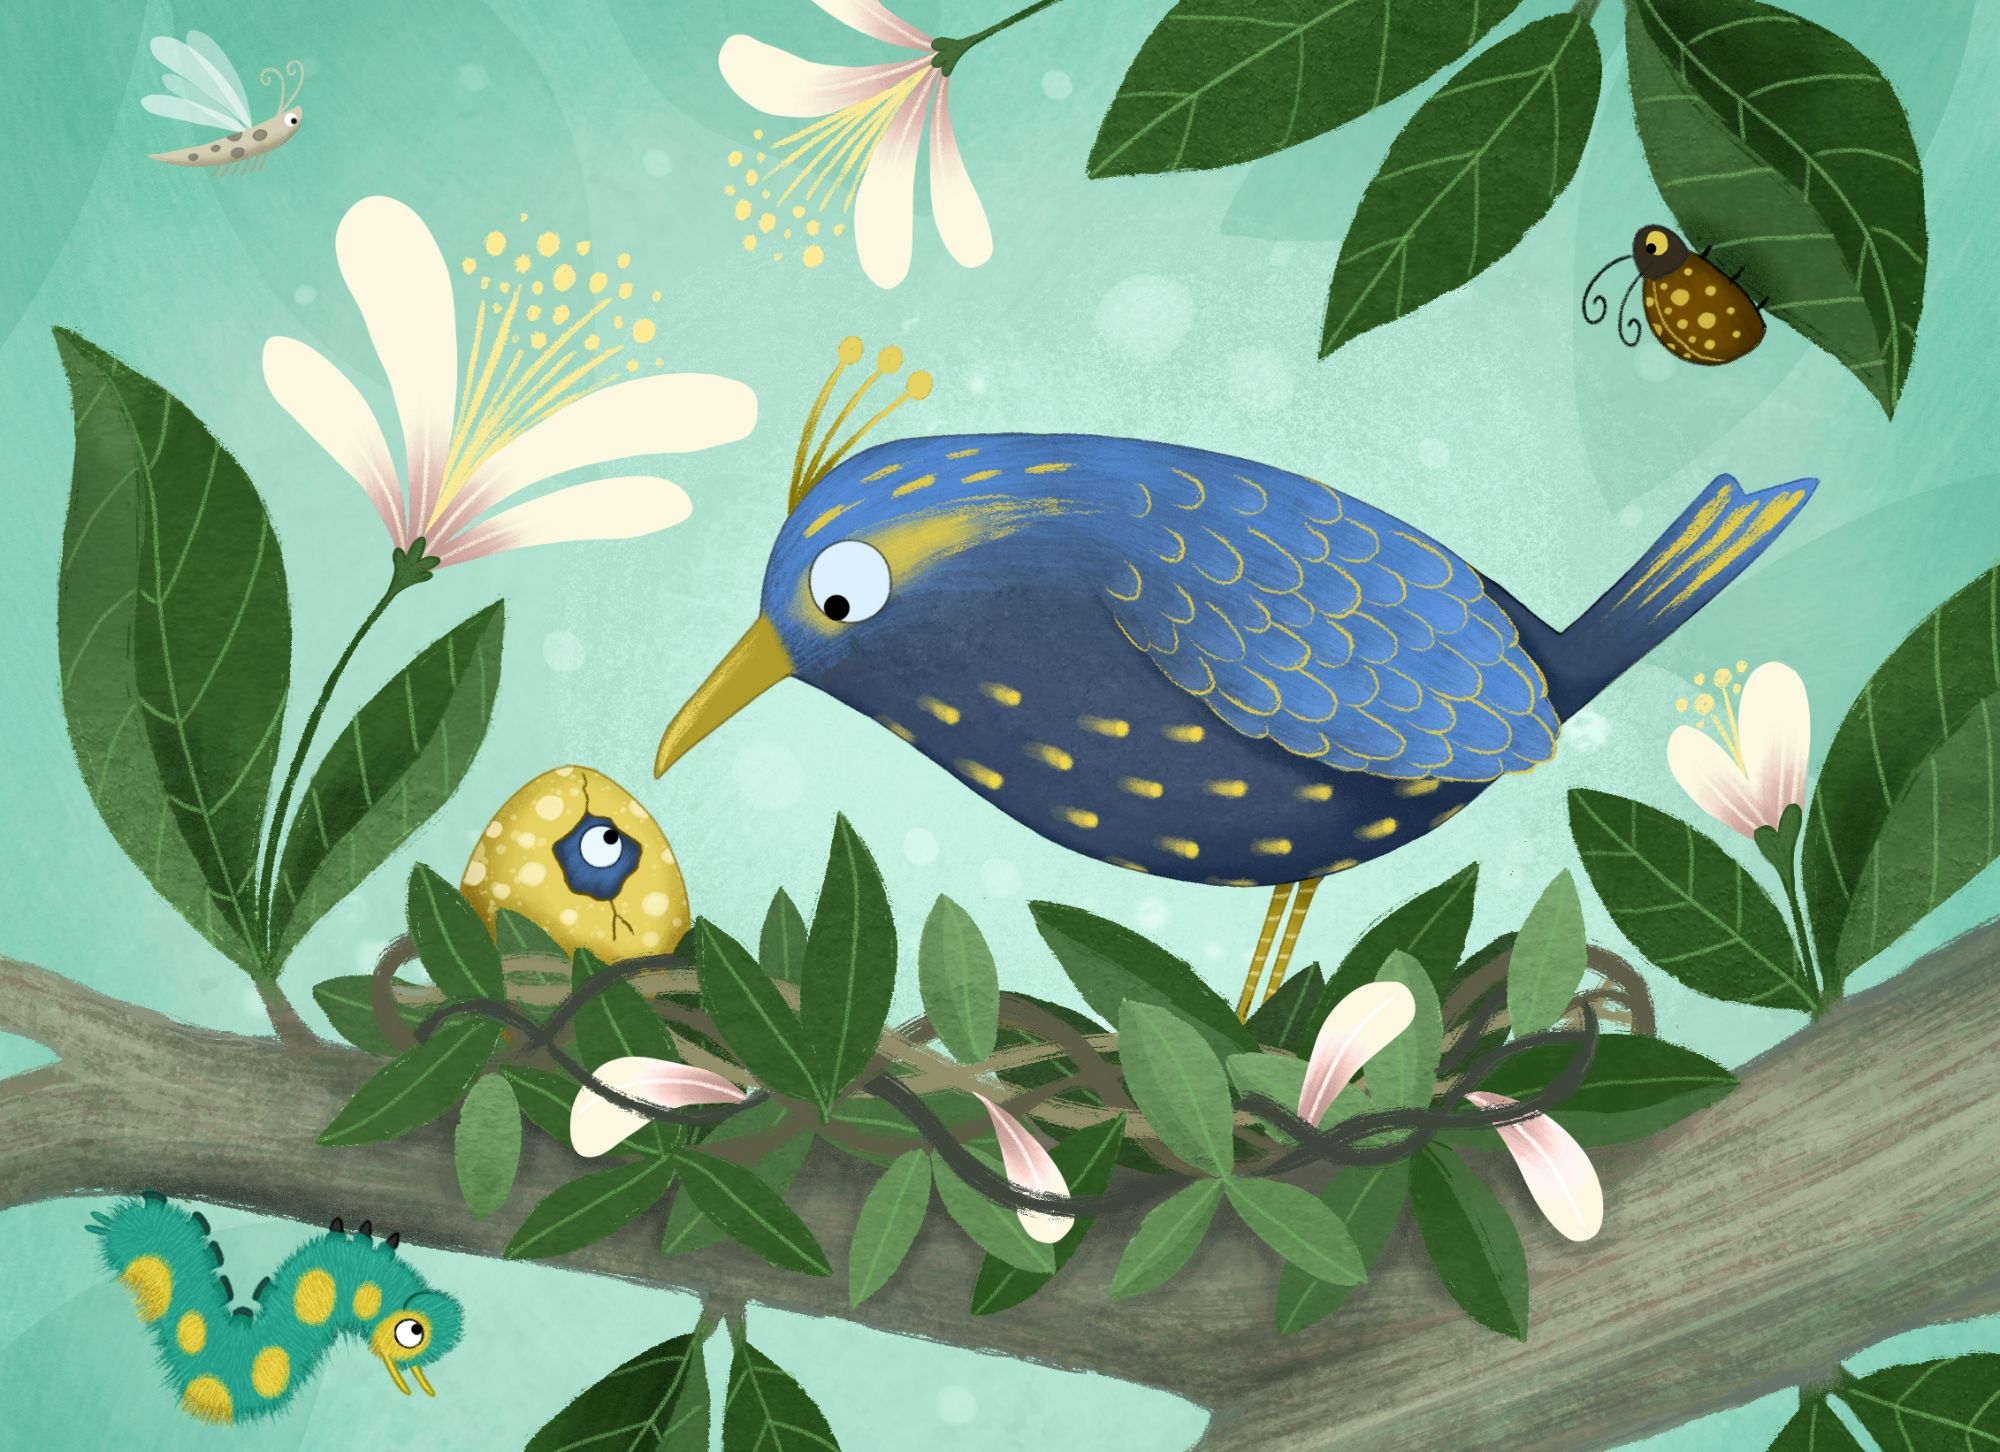 Tropical Bird and Egg Illustration